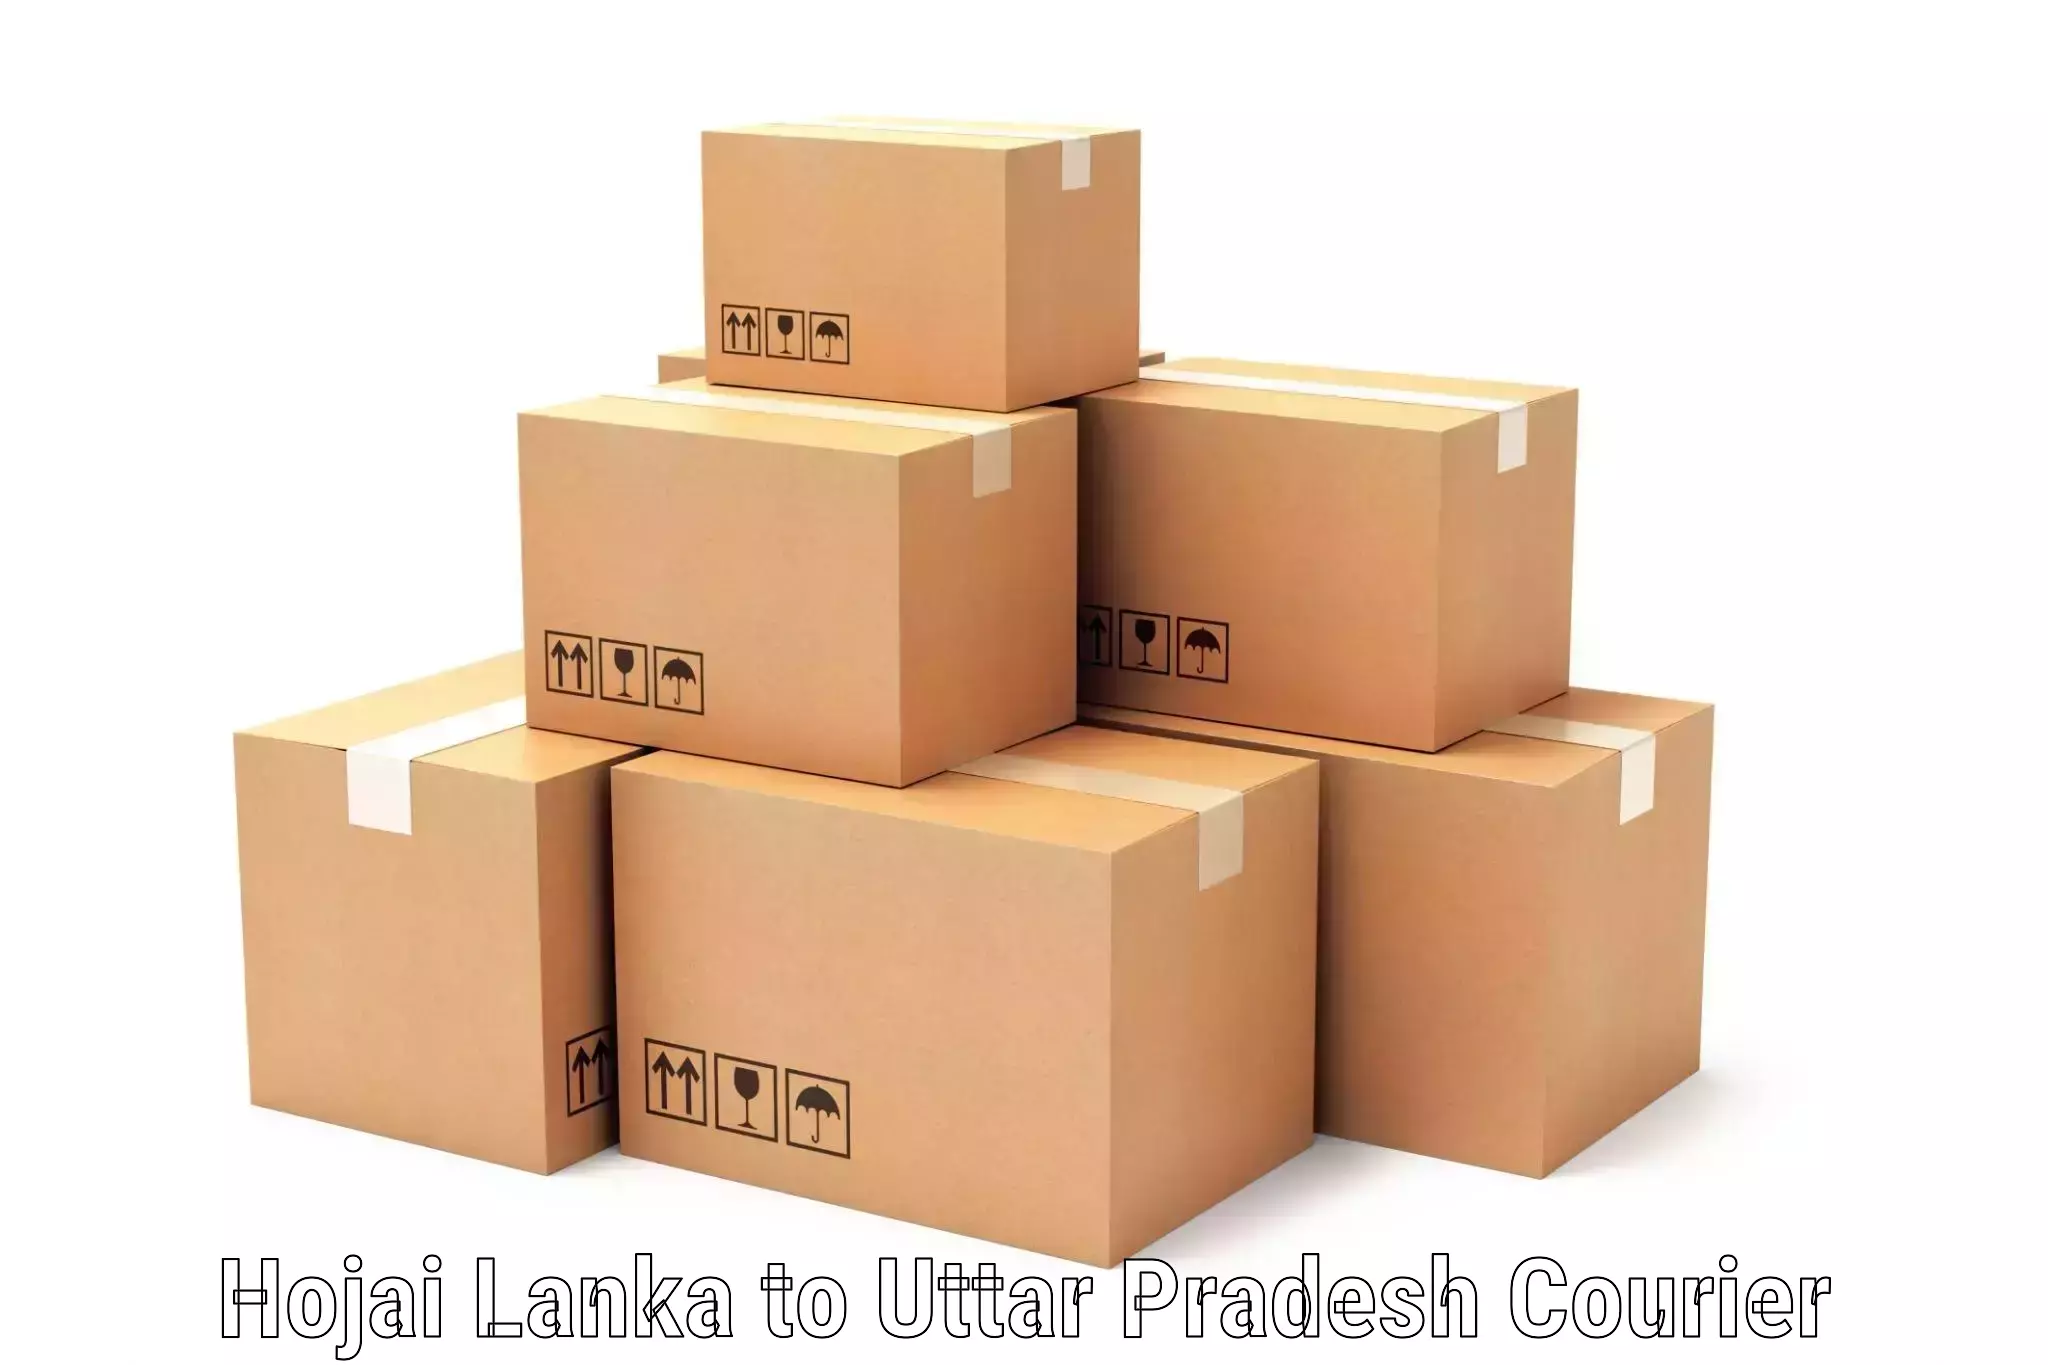 Global shipping networks Hojai Lanka to Soraon